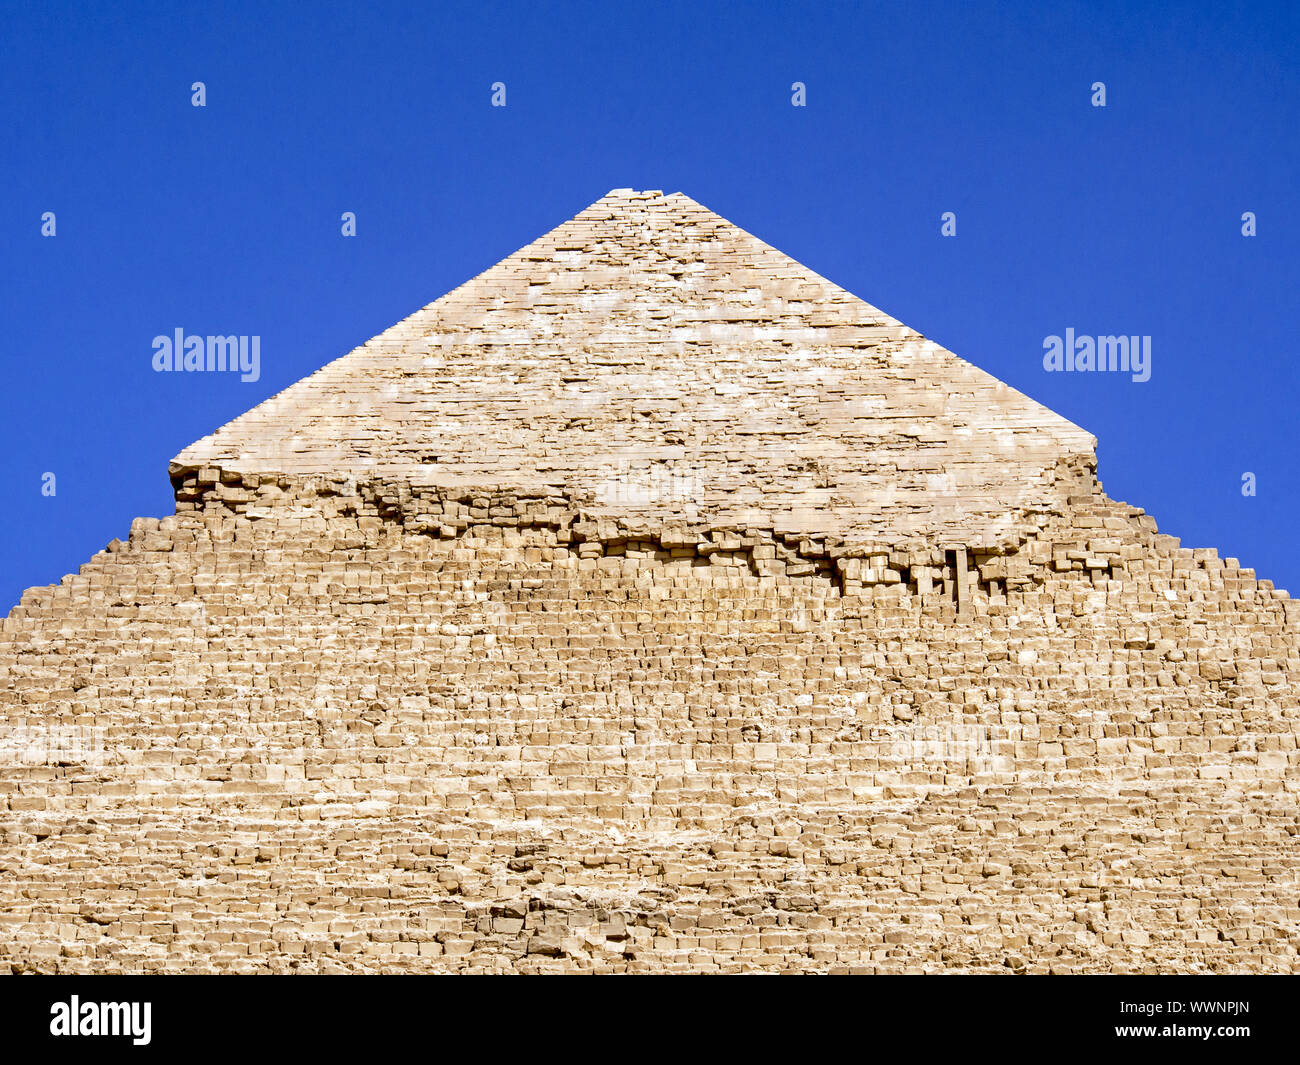 La pirámide de Khafre Foto de stock